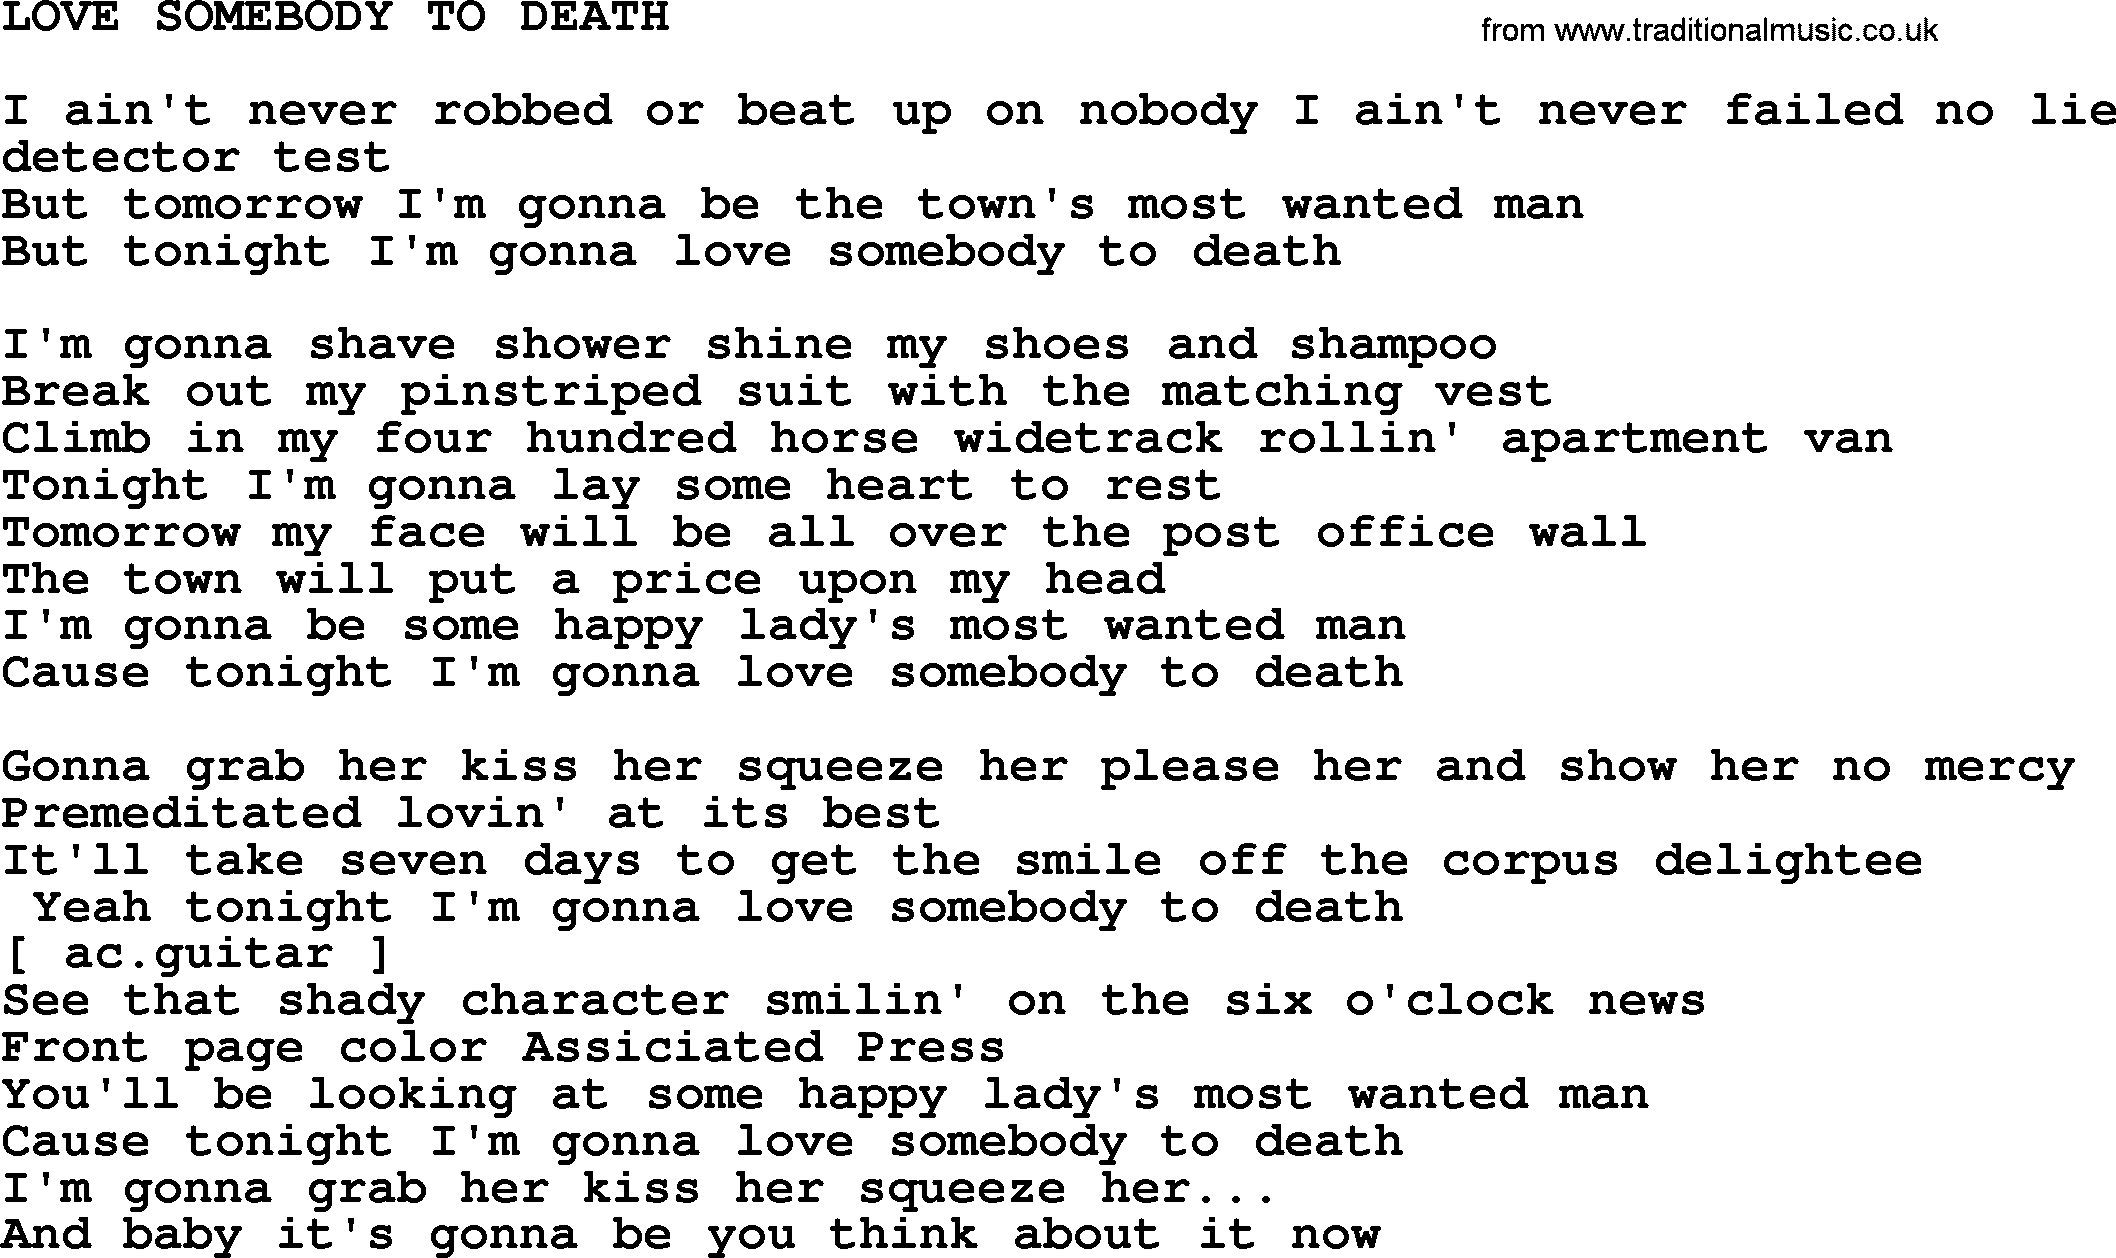 Merle Haggard song: Love Somebody To Death, lyrics.